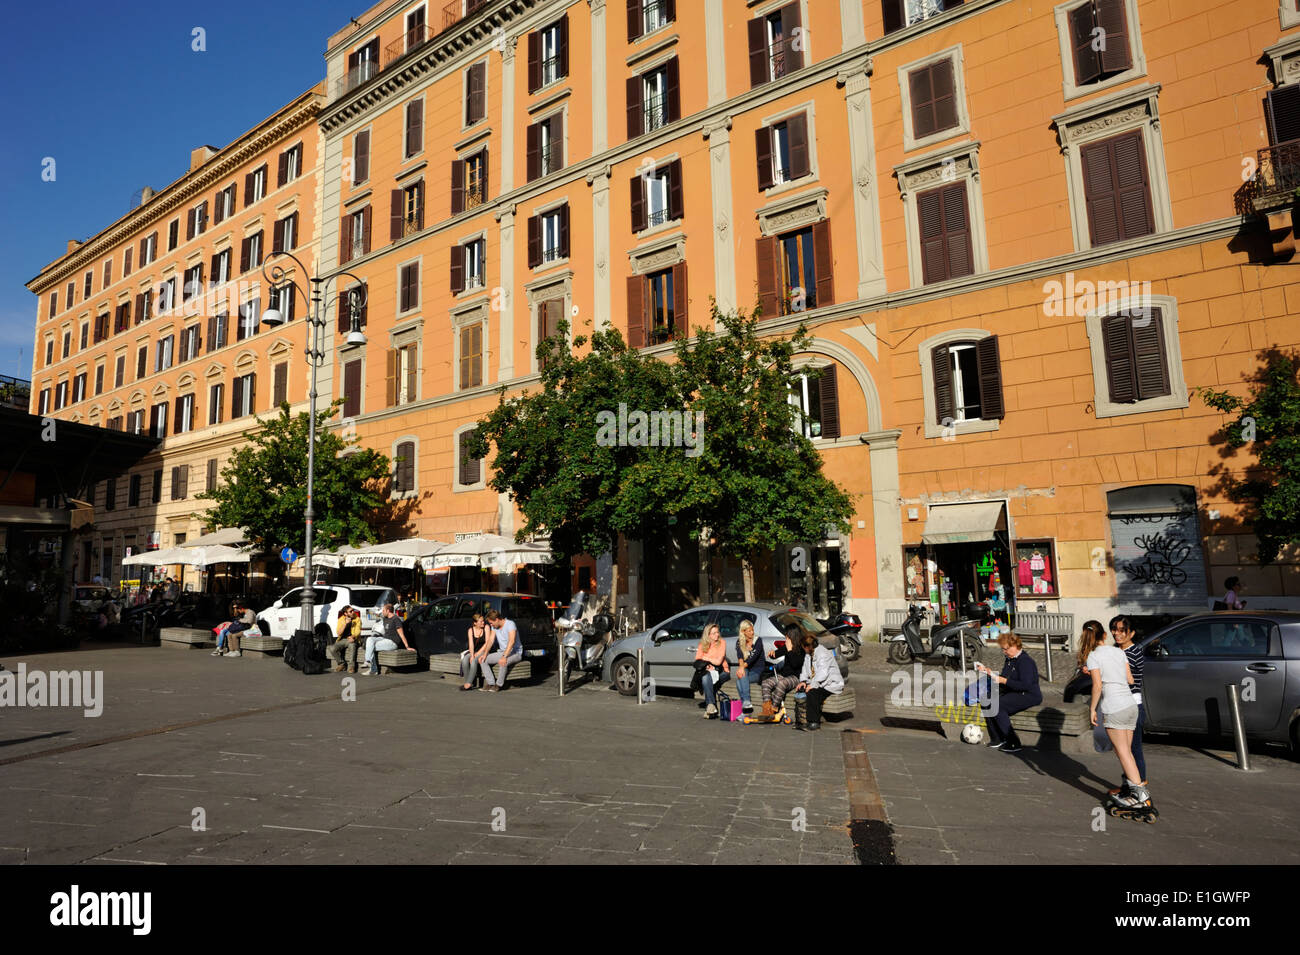 Italy, Rome, Trastevere, Piazza San Cosimato Stock Photo